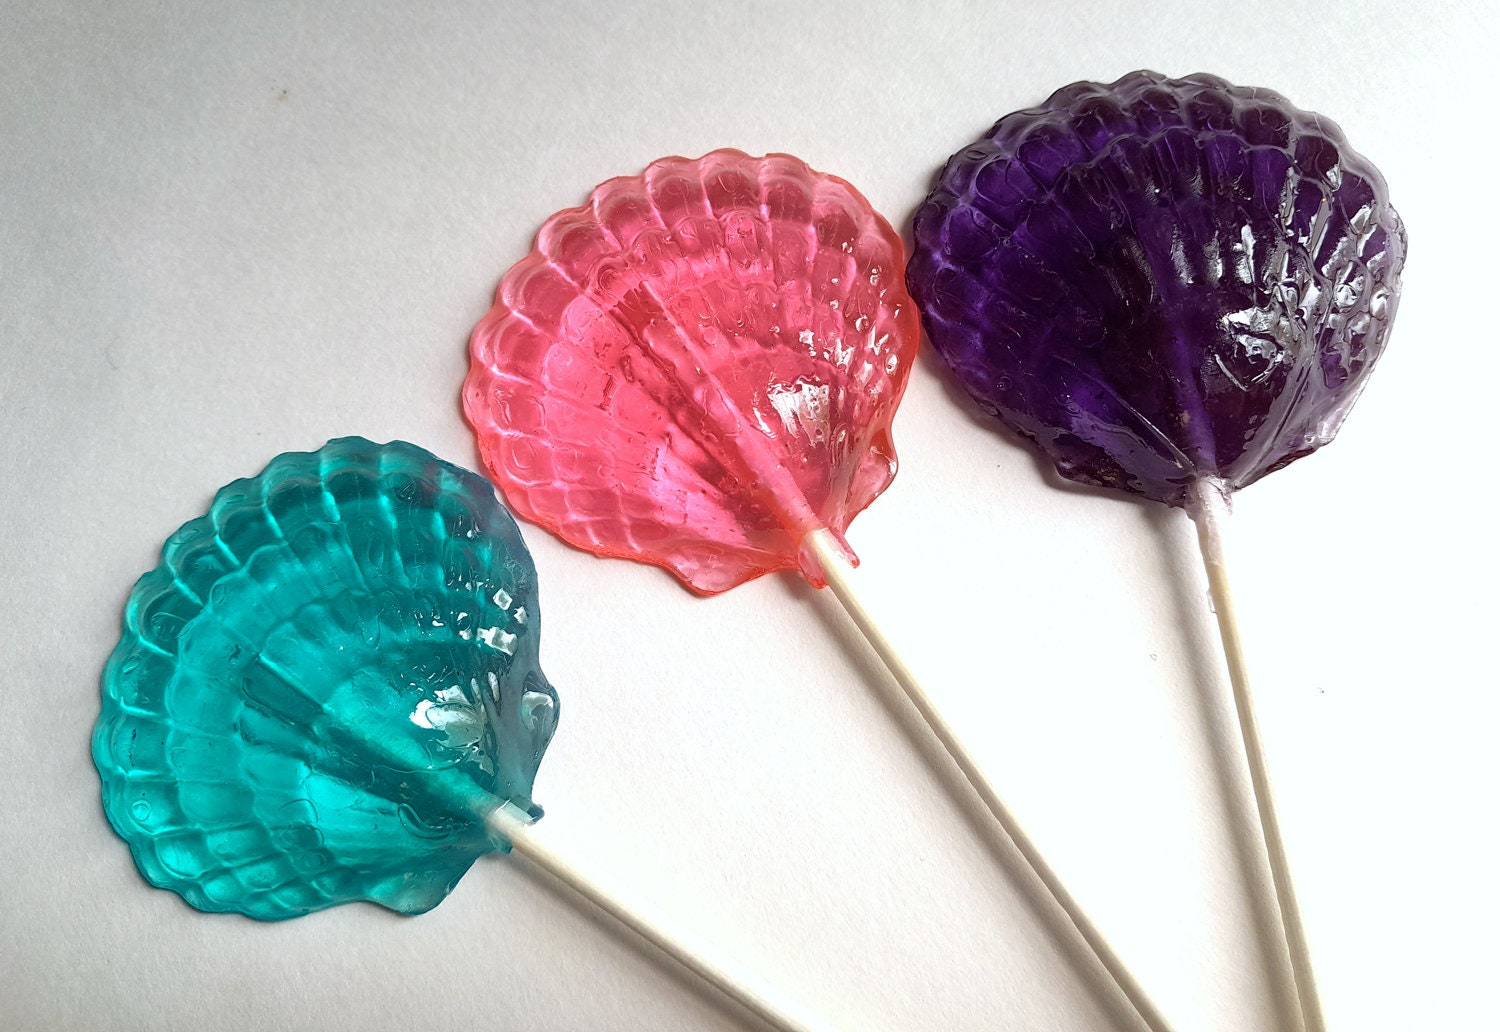 6 Inch Lollipop Sticks at Rs 50/pack, Plastic Candy Sticks in Bengaluru